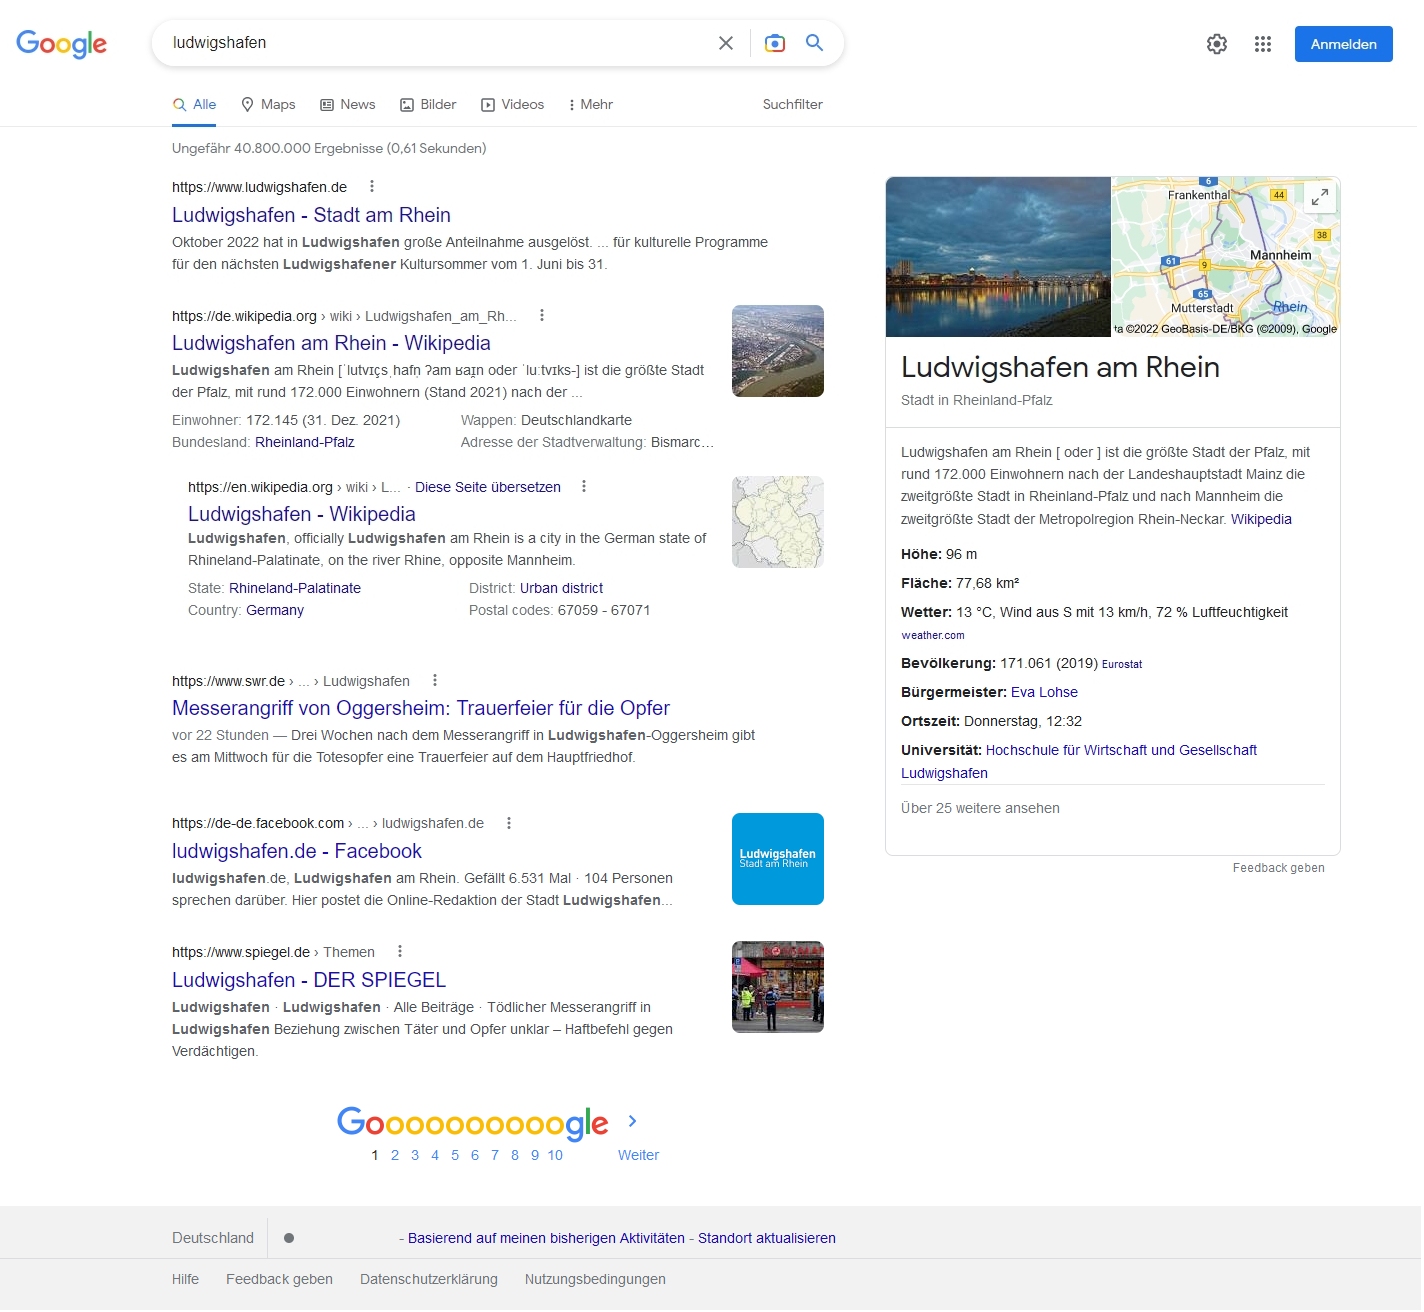 google - Ludwigshafen.jpg